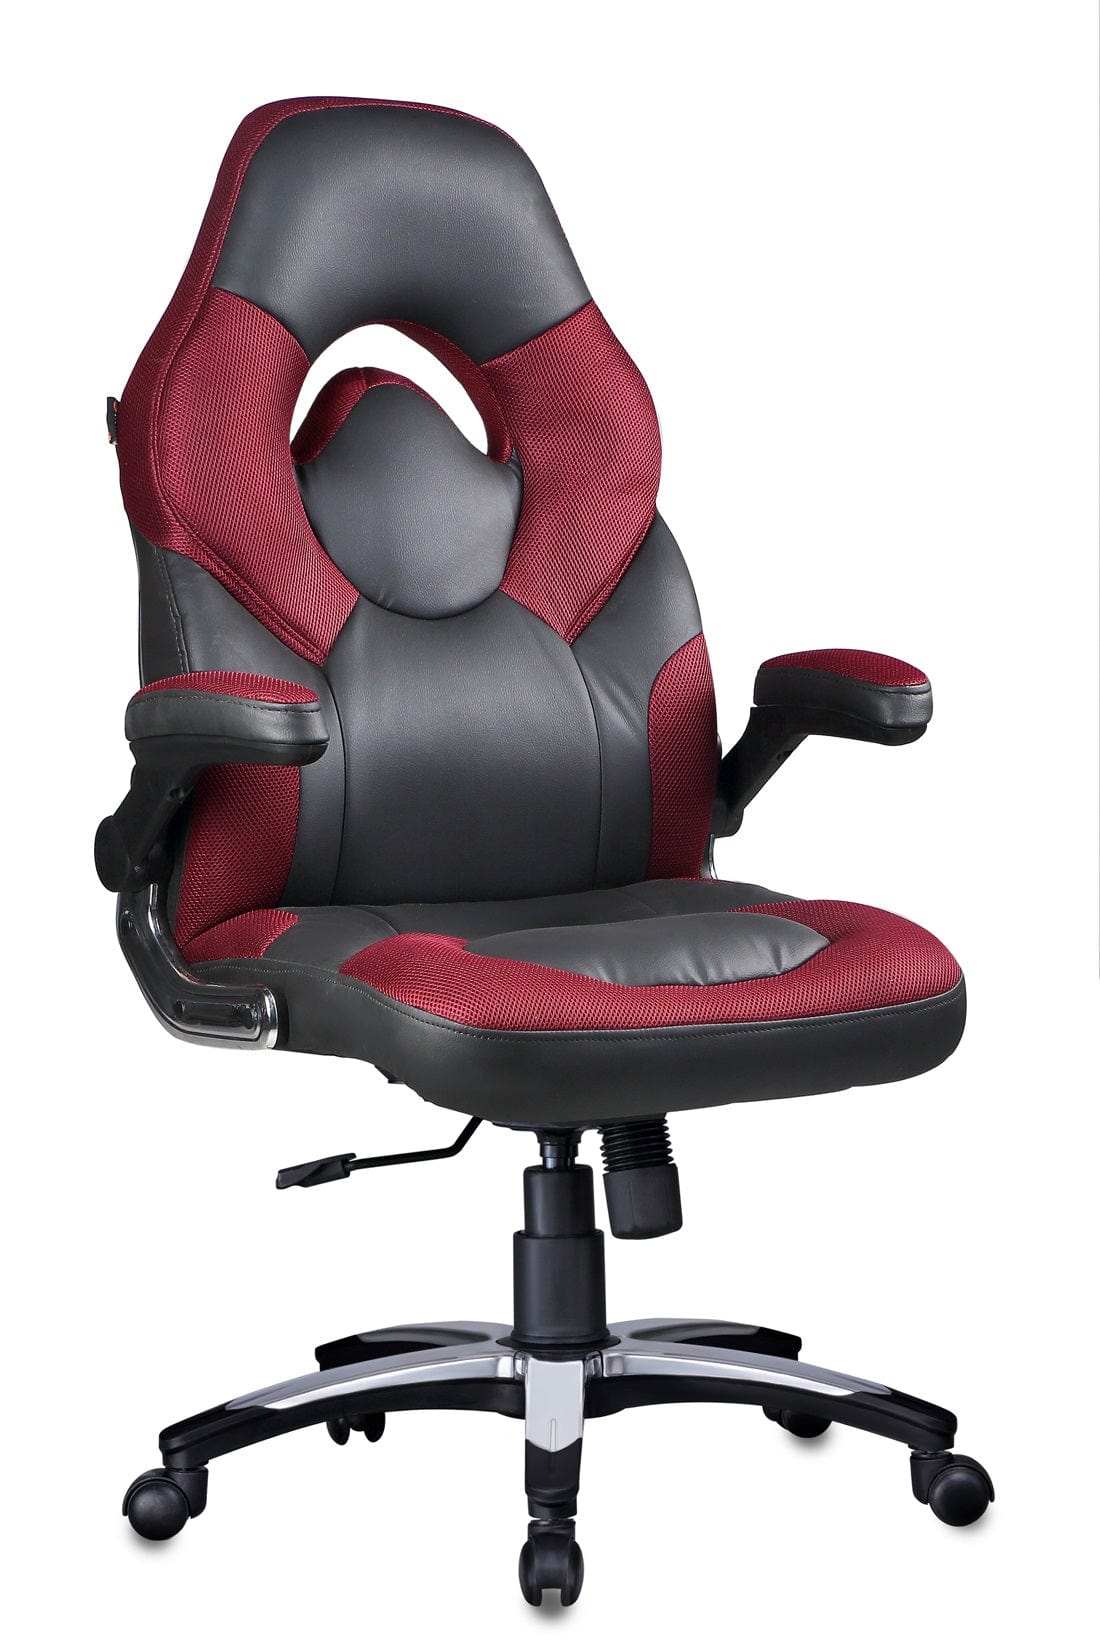 Stylish Designer chair in Black / Maroon